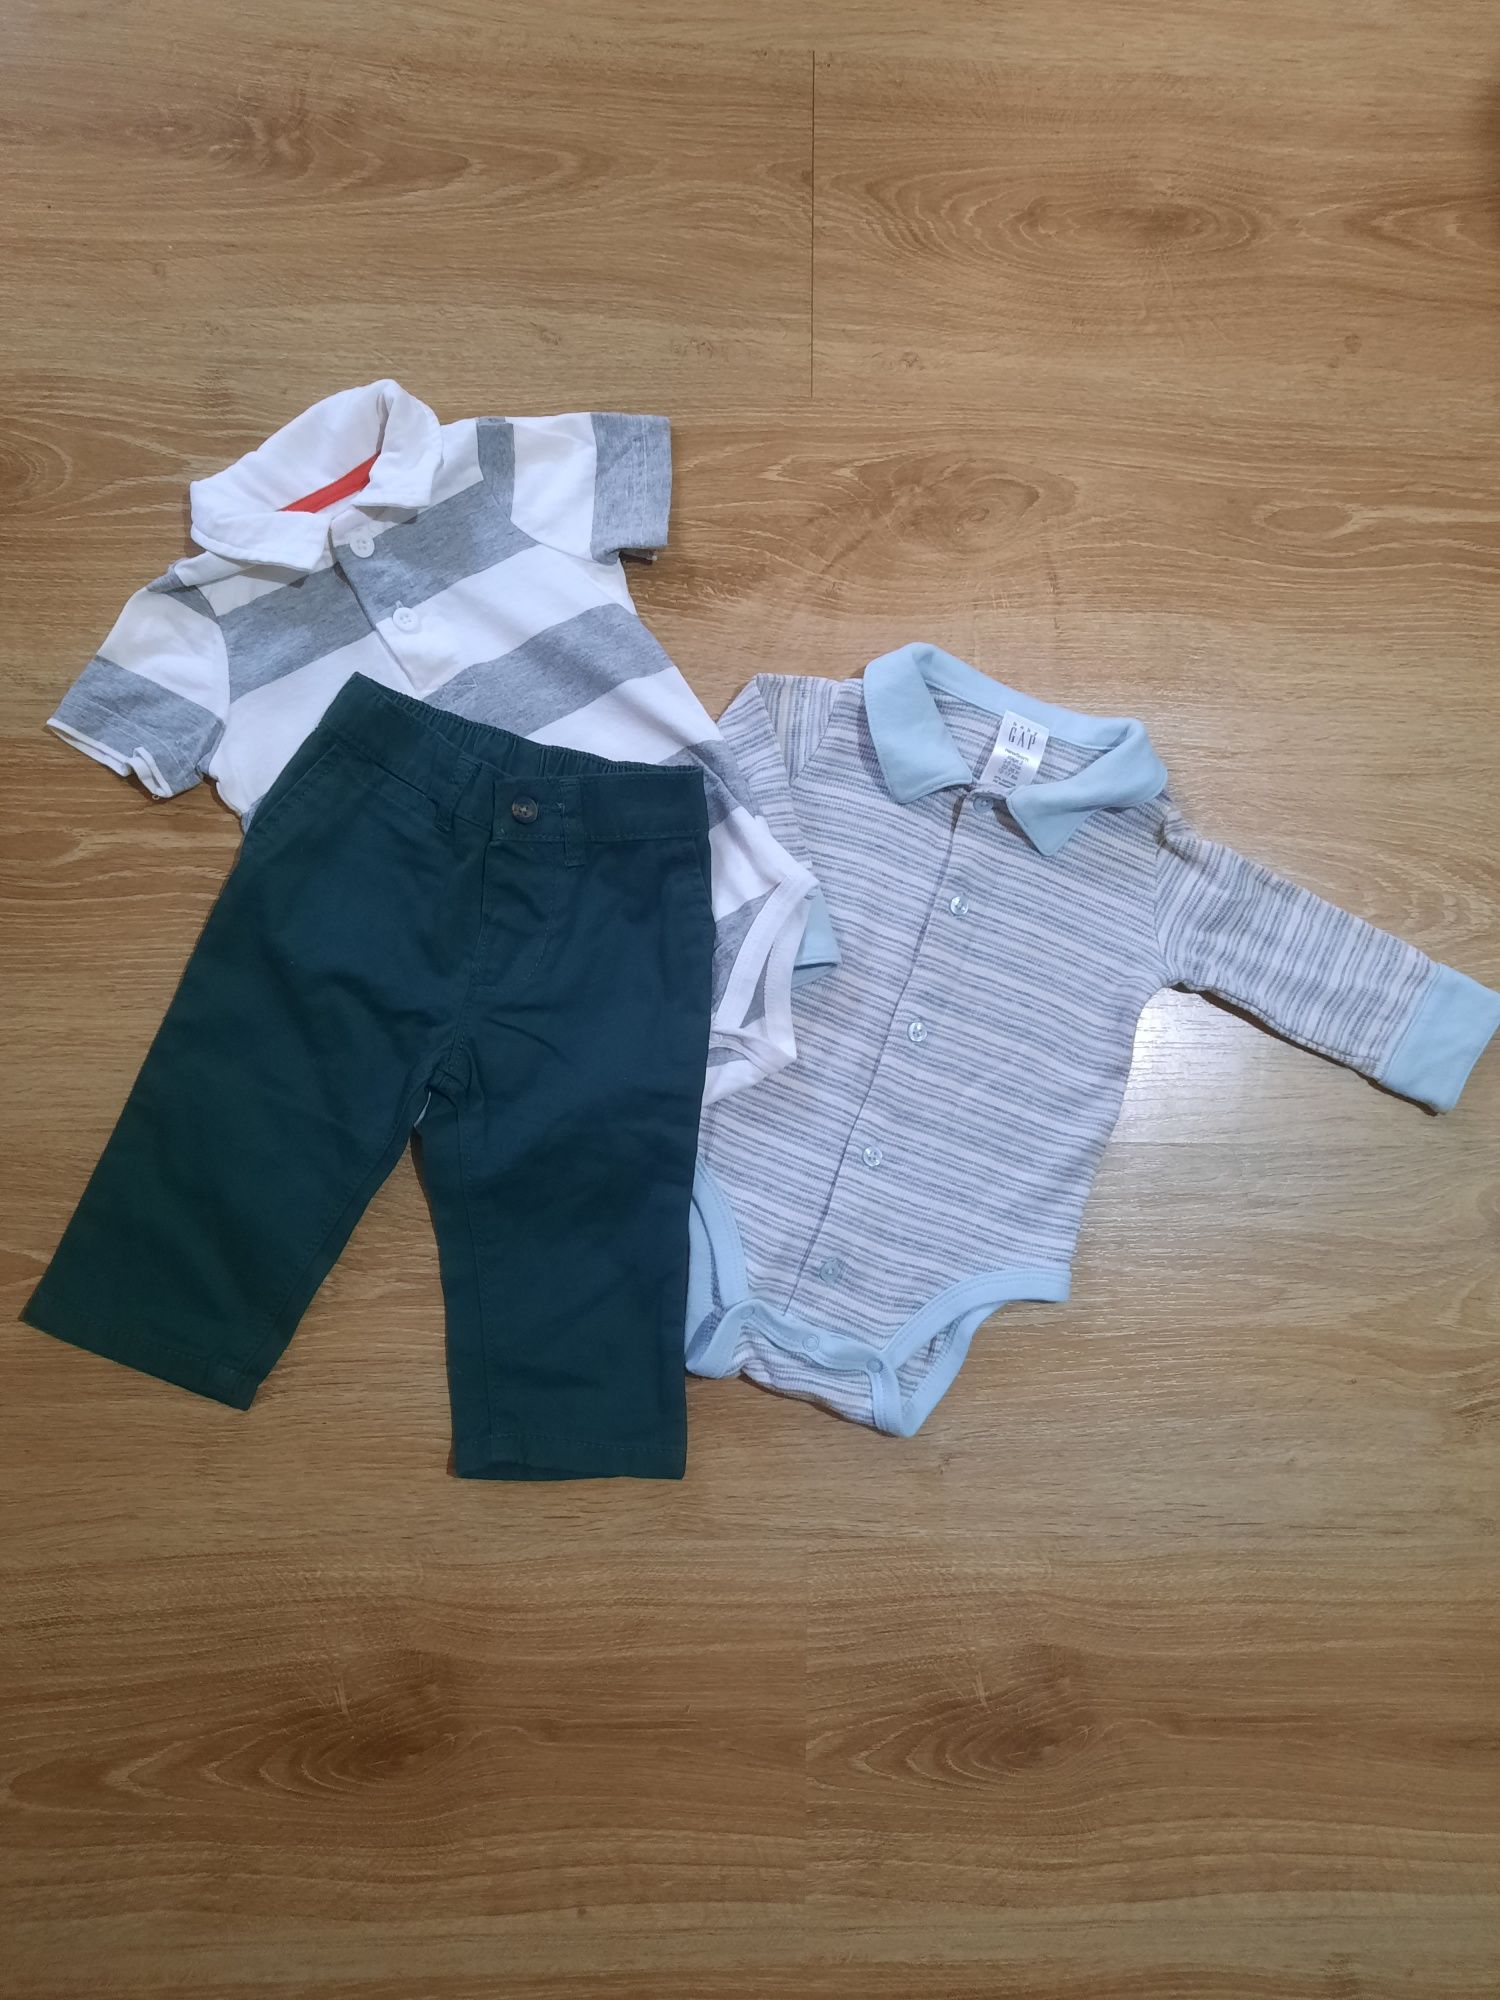 Одежда для малыша 6 месяцев